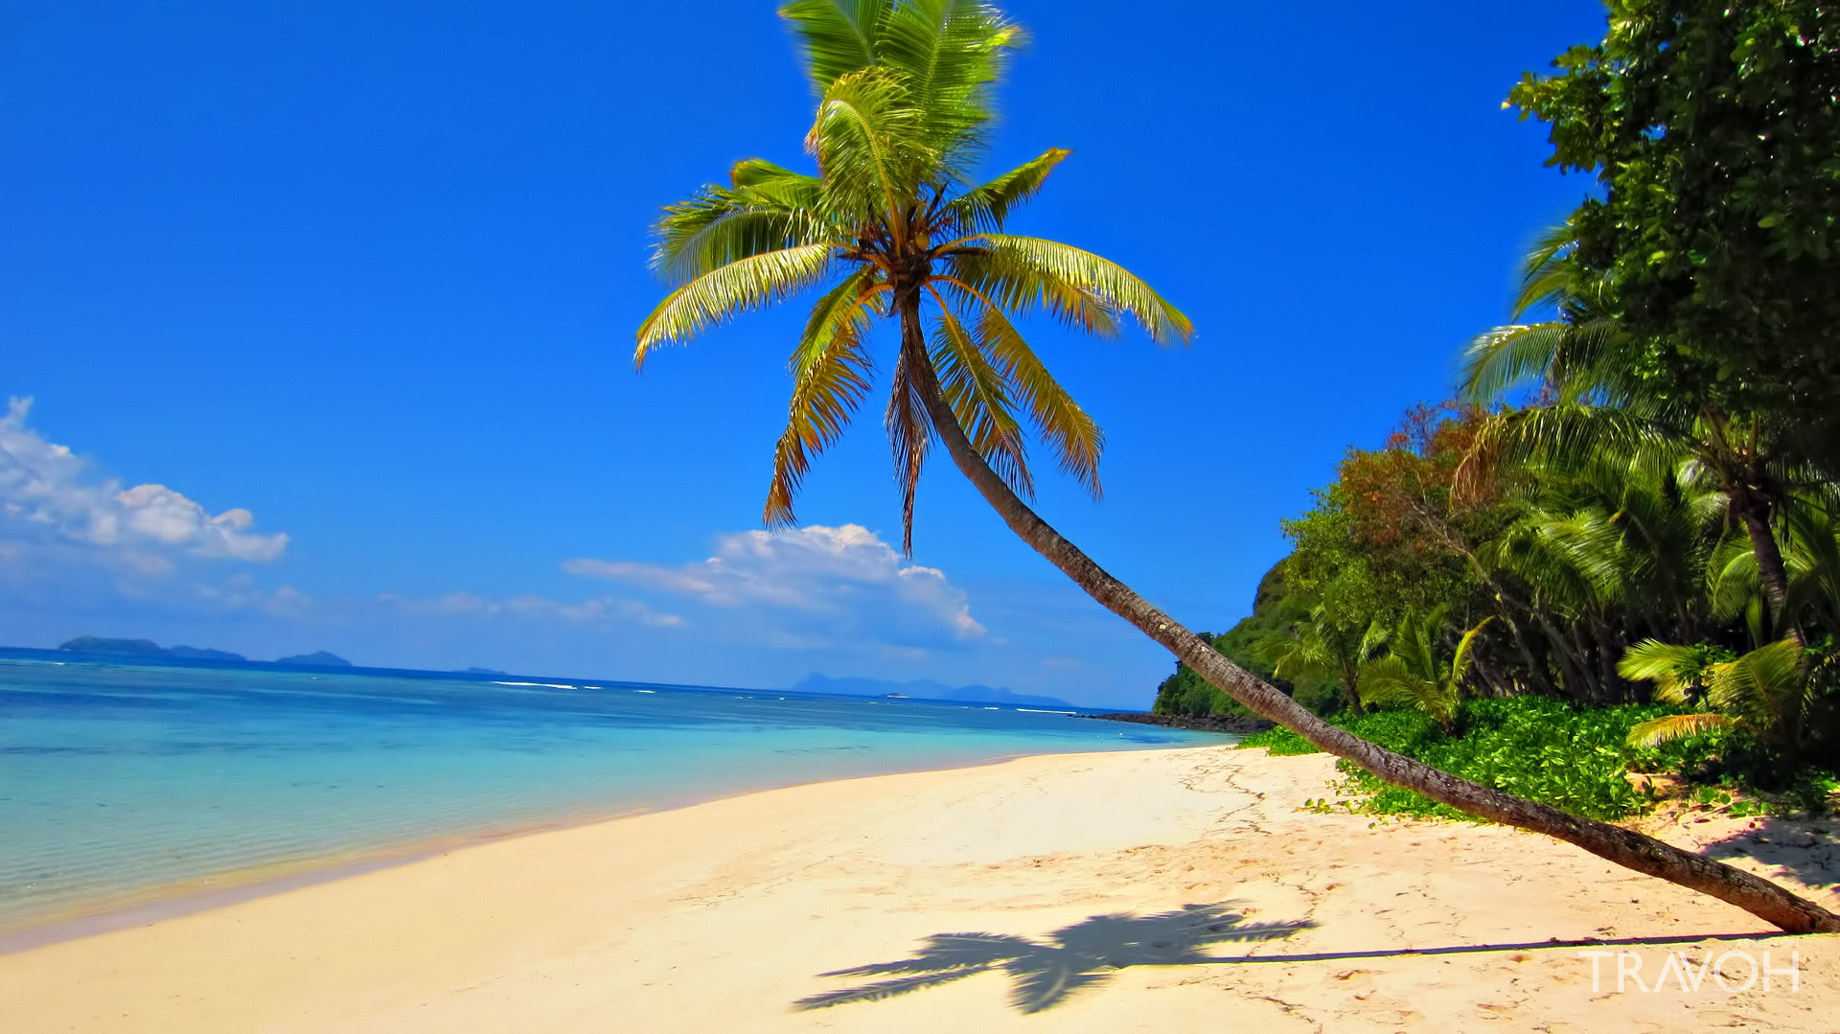 Tokoriki Island Resort - Exploring 10 of the Top Beach Locations on the Islands of Fiji